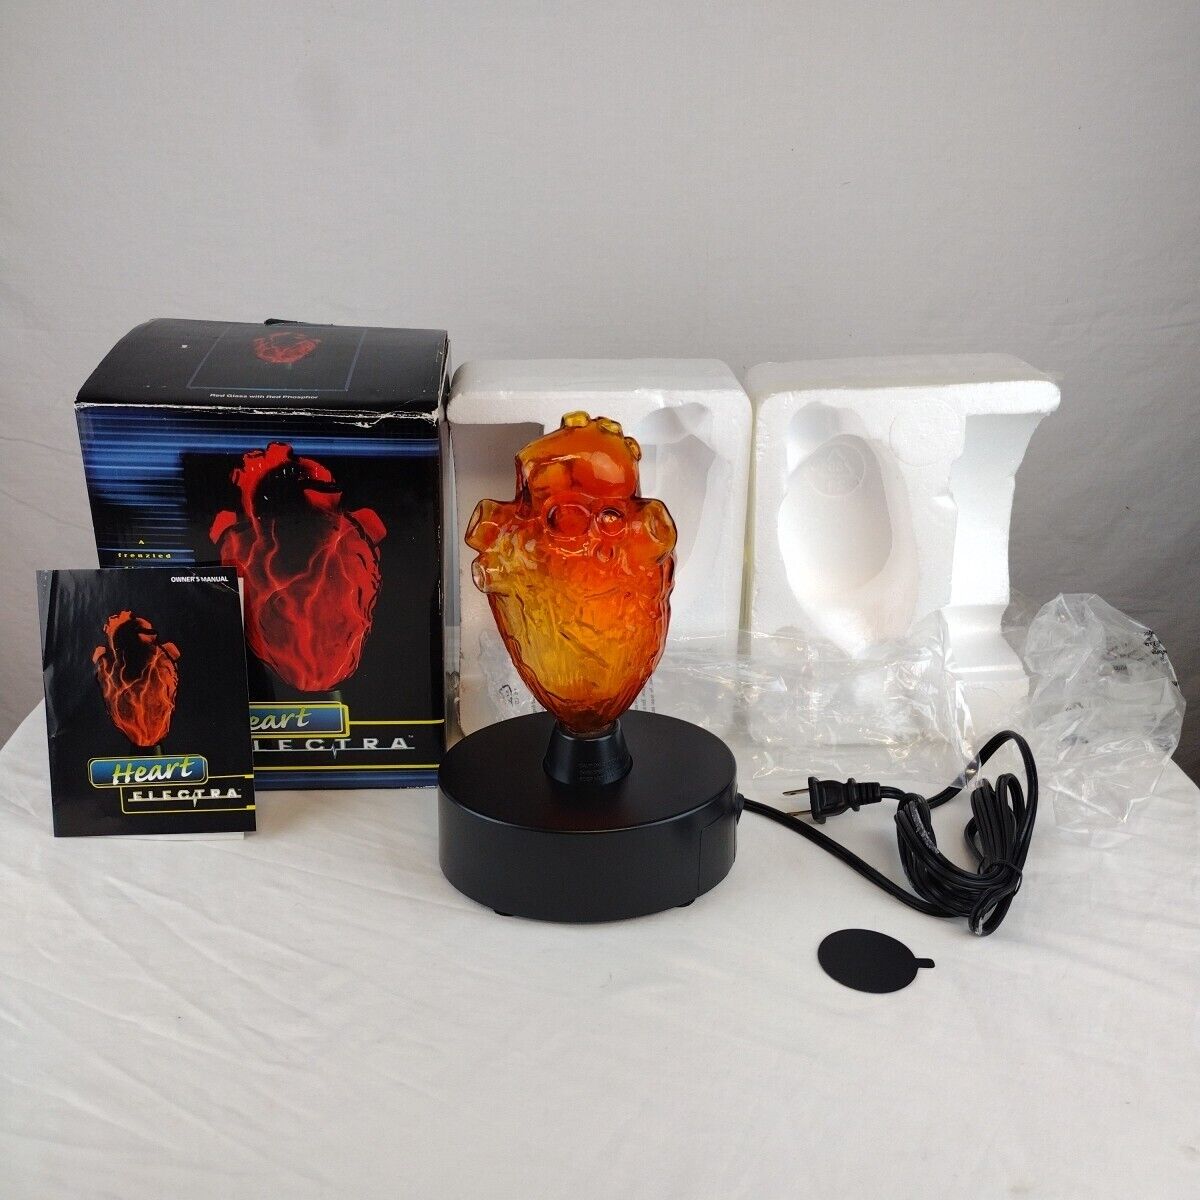 LumiSource Sculptured Electra Mini Heart Plasma Lamp